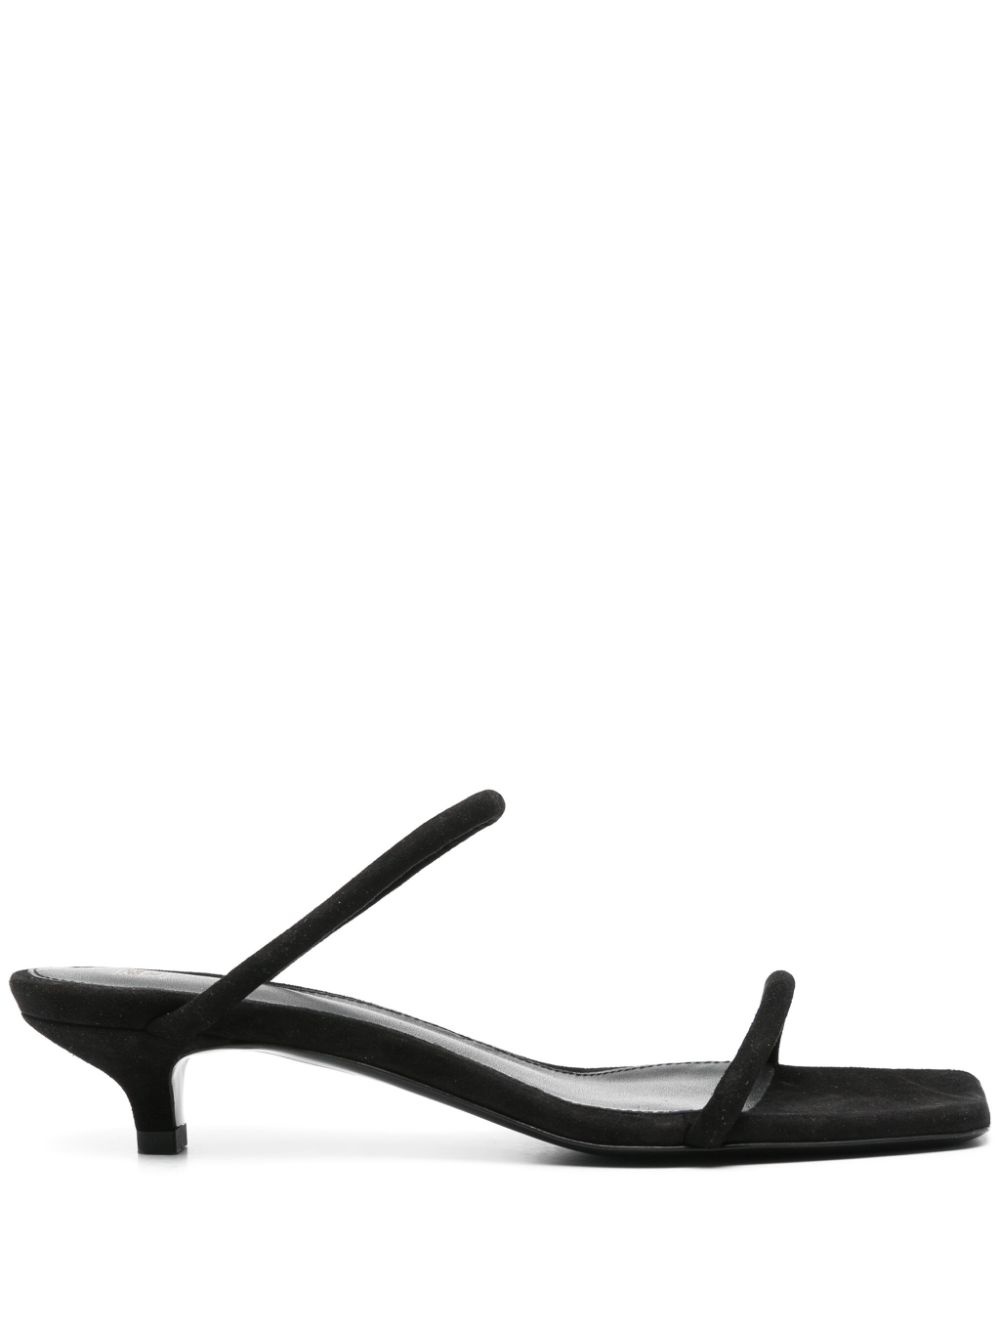 The minimalist leather sandals - 1